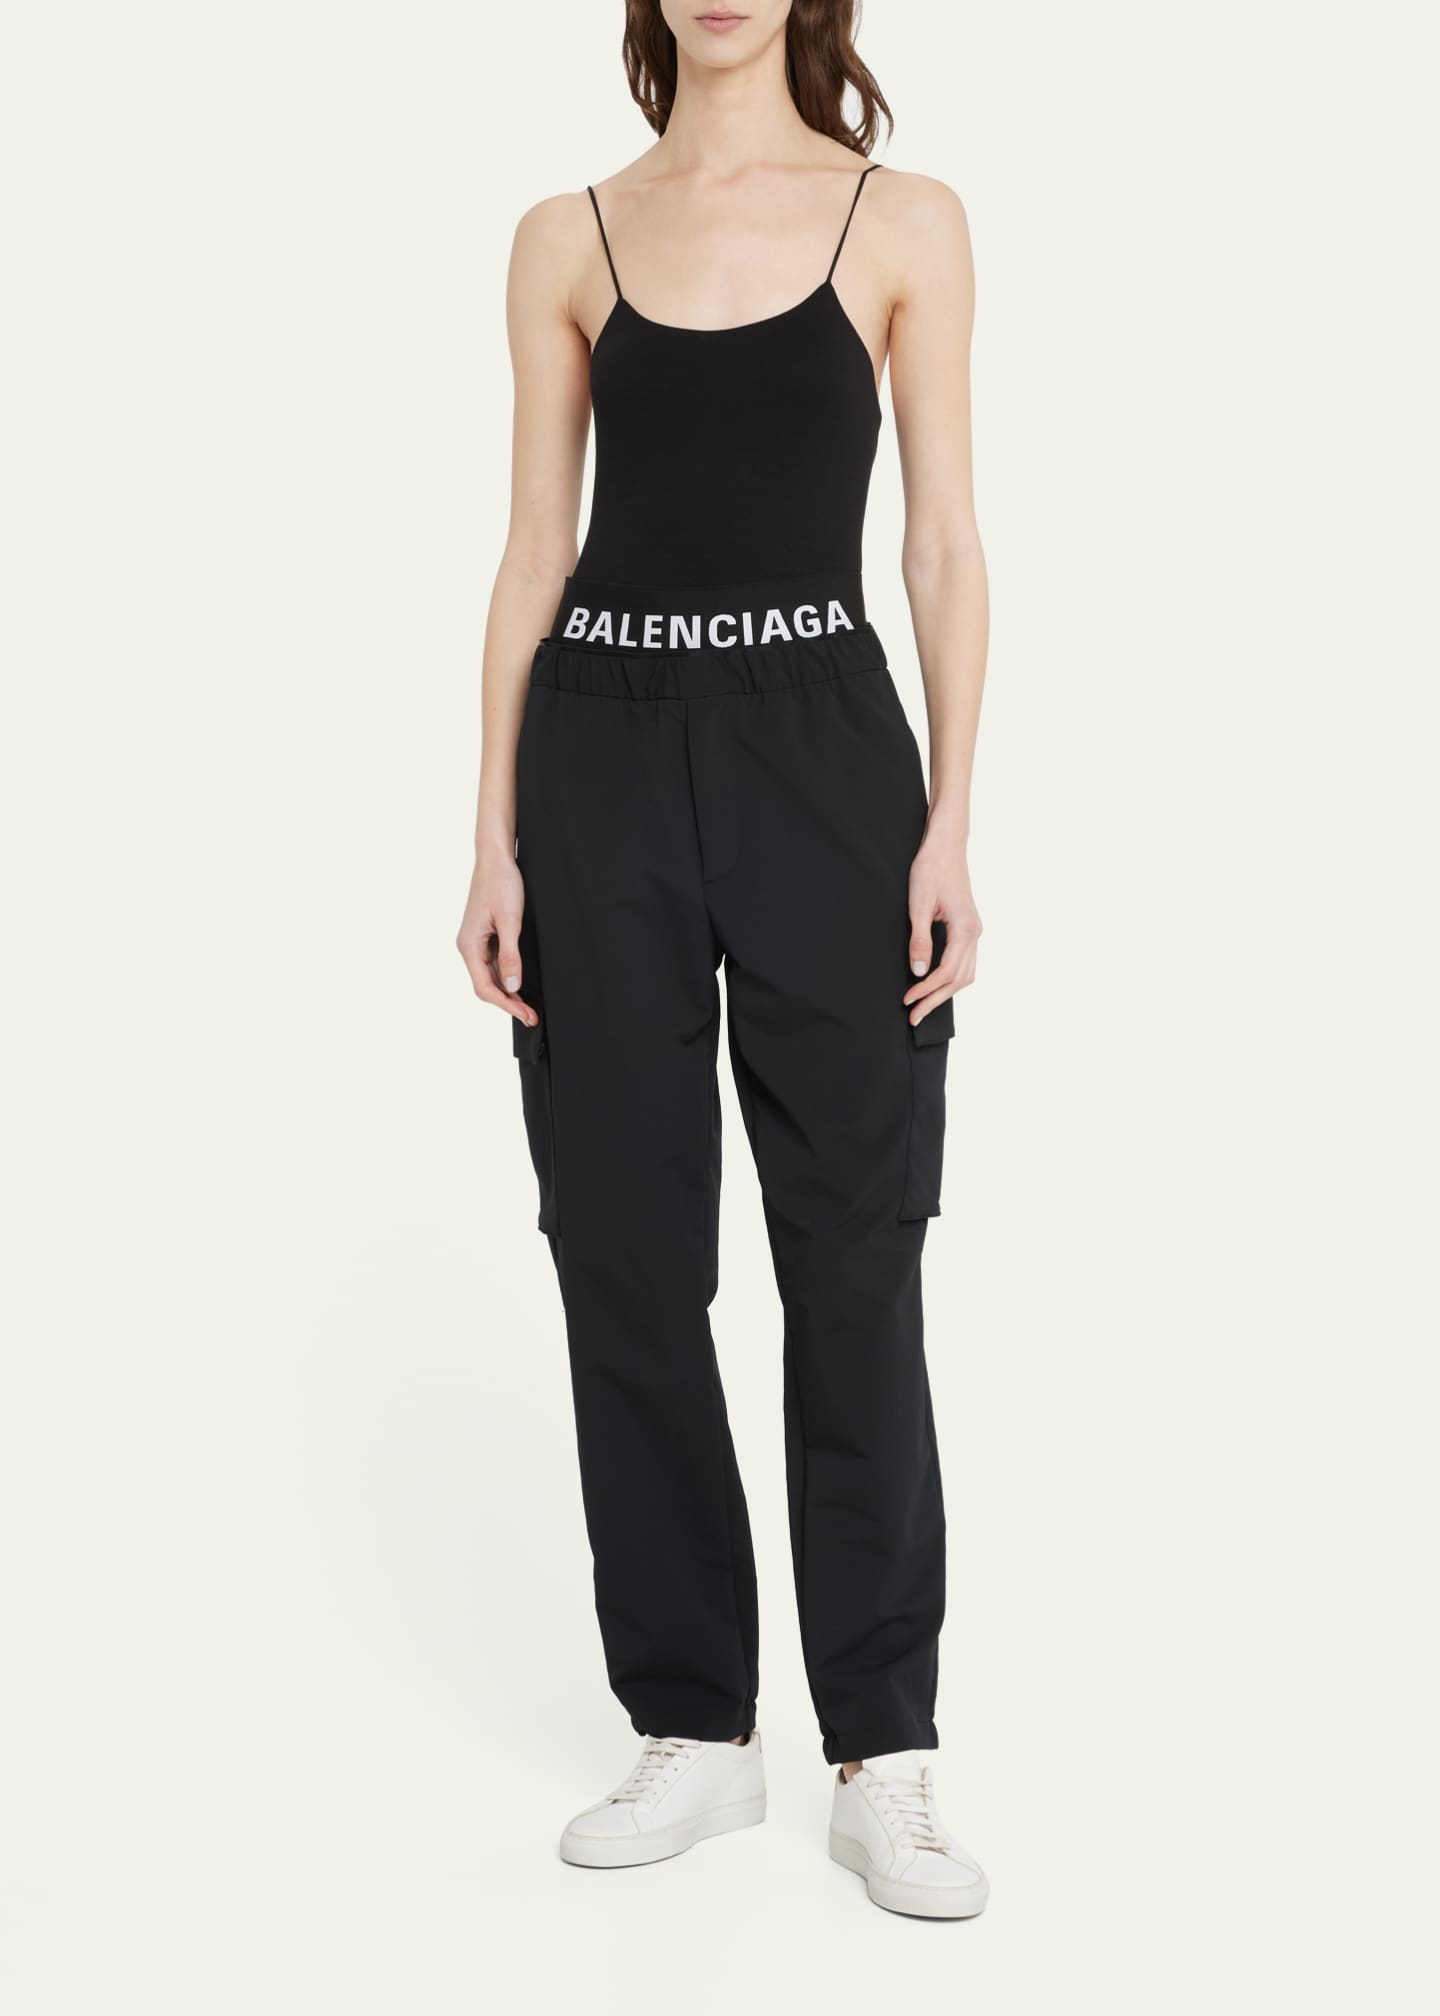 Balenciaga Women's Underwear Briefs - Clothing